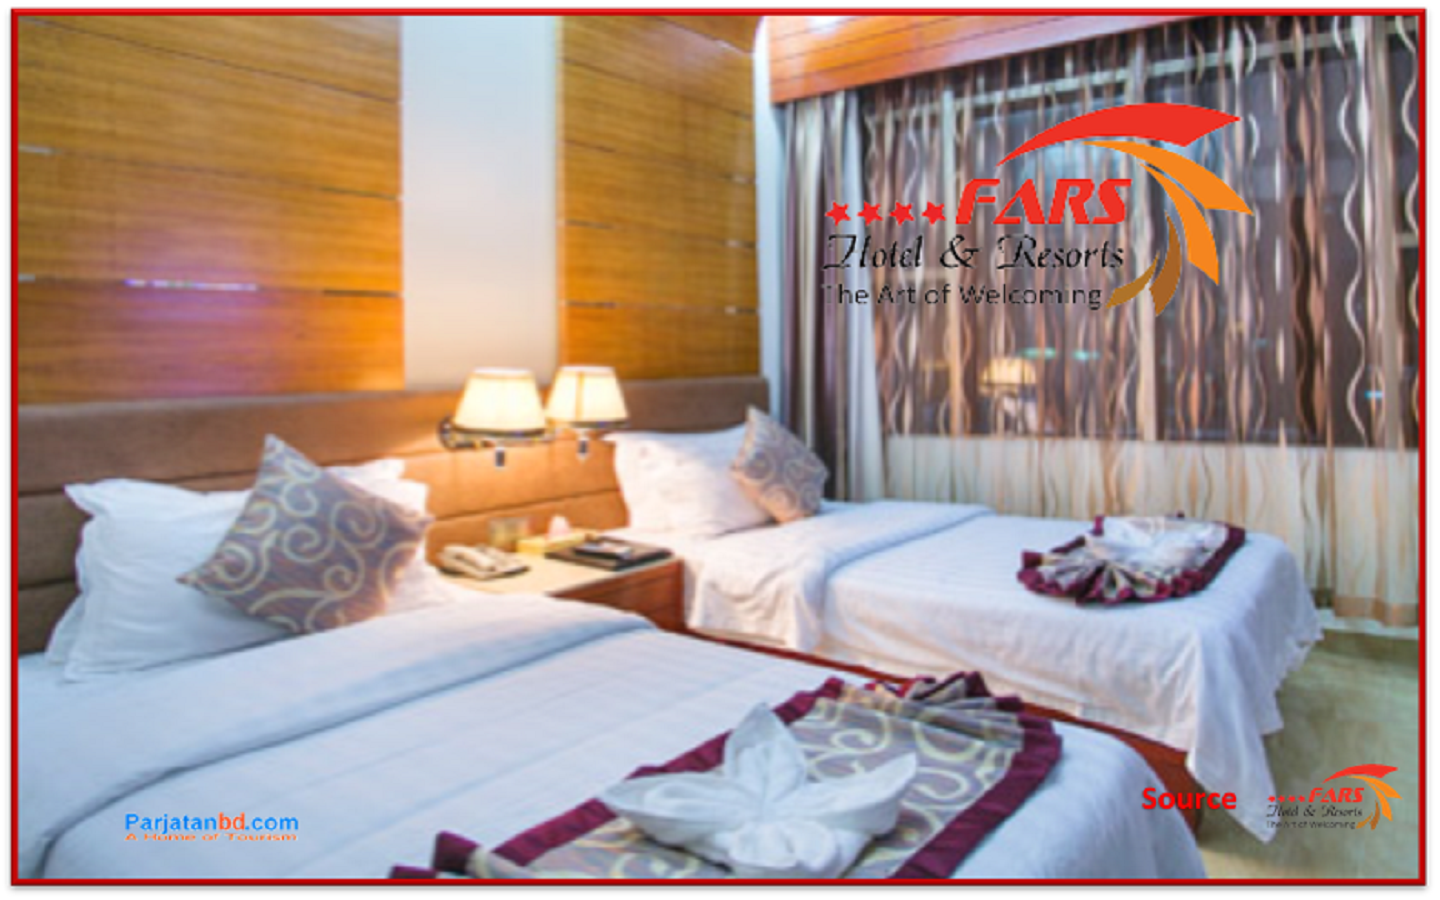 Room Premier Twin -1, FARS Hotel & Resorts, Bijonagar